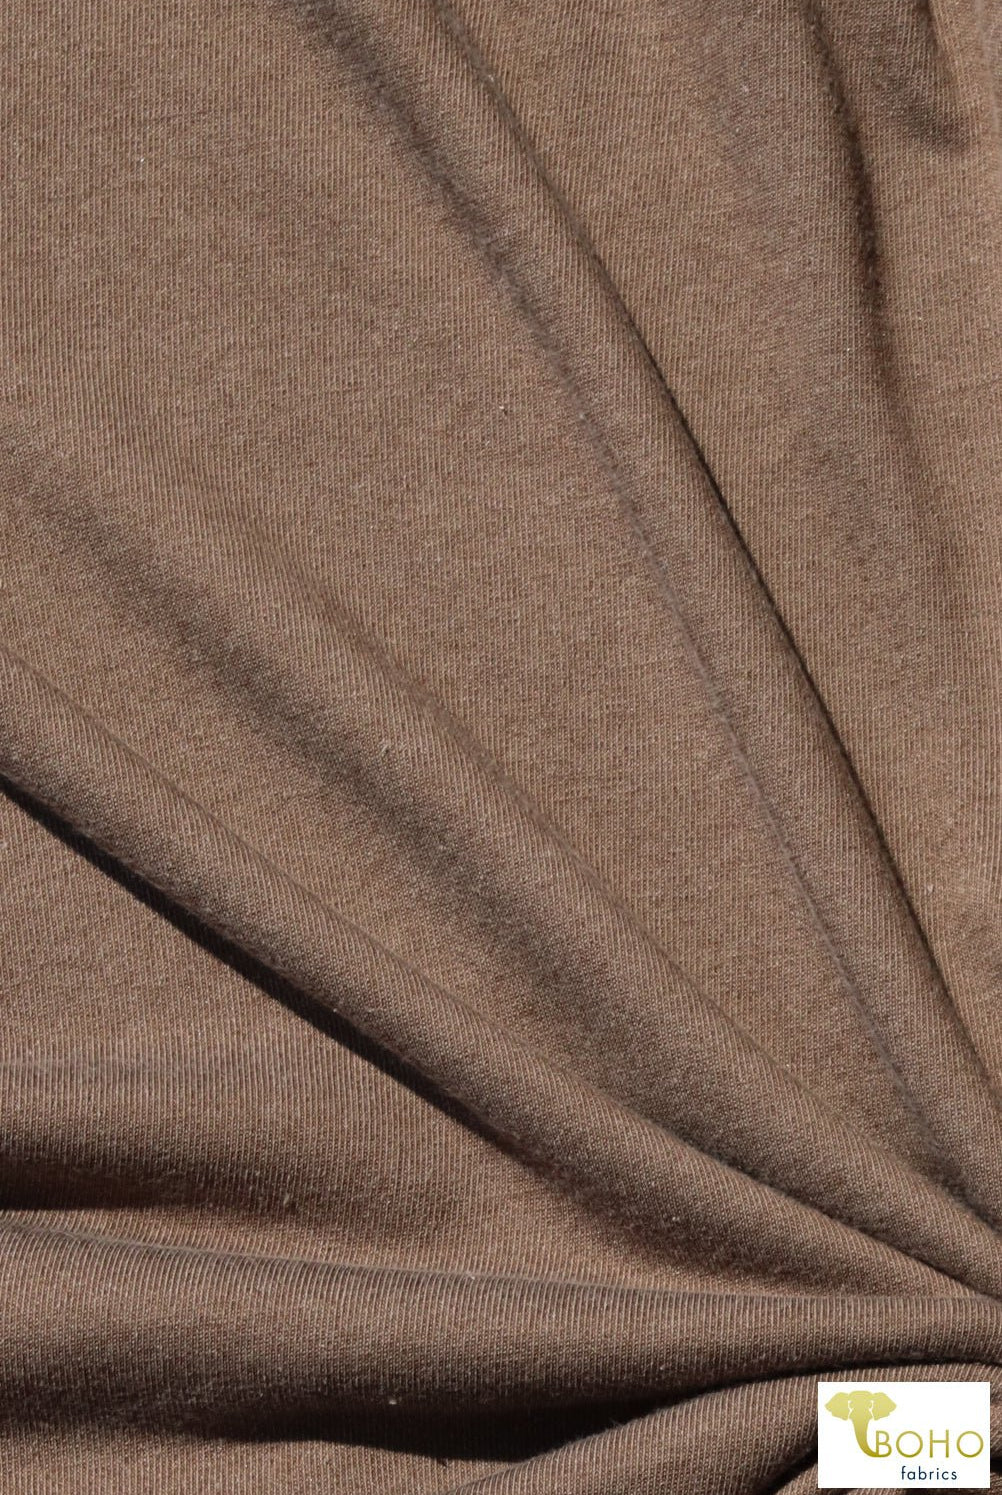 Light Brown Terry Cloth Knit. FTS-204 - Boho Fabrics